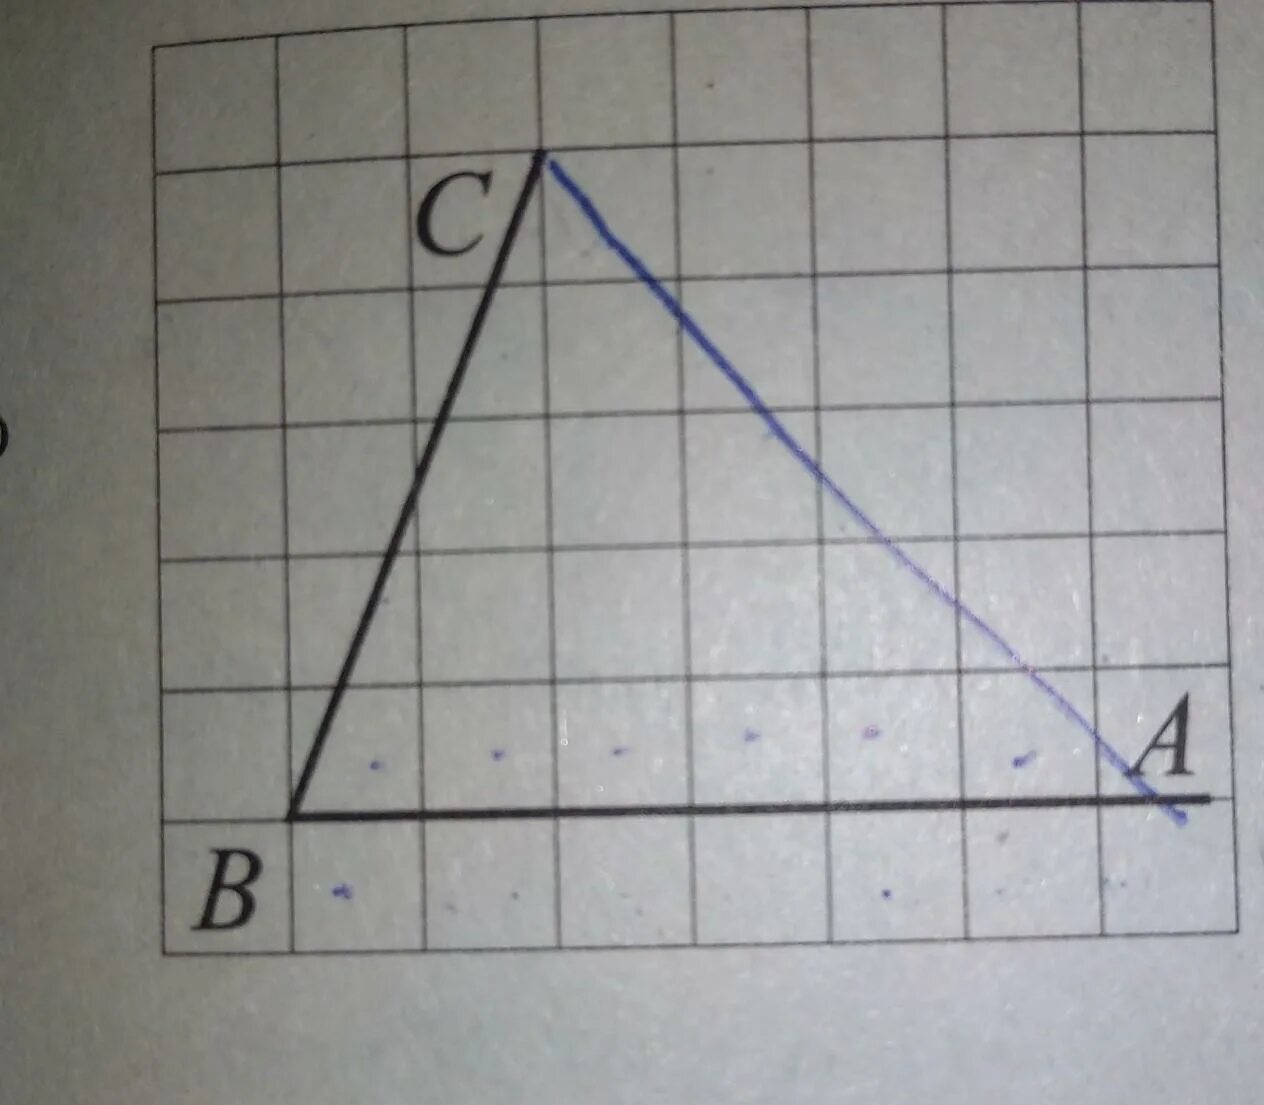 Найдите тангенс угла АБС изображенном на рисунке. Найдите тангенс угла ABC изображённого на рисунке. Найдите тангенс угла АБС изображенном на рисунке 5. Найдите тангенс угла а треугольника ABC, изображённого на рисунке..